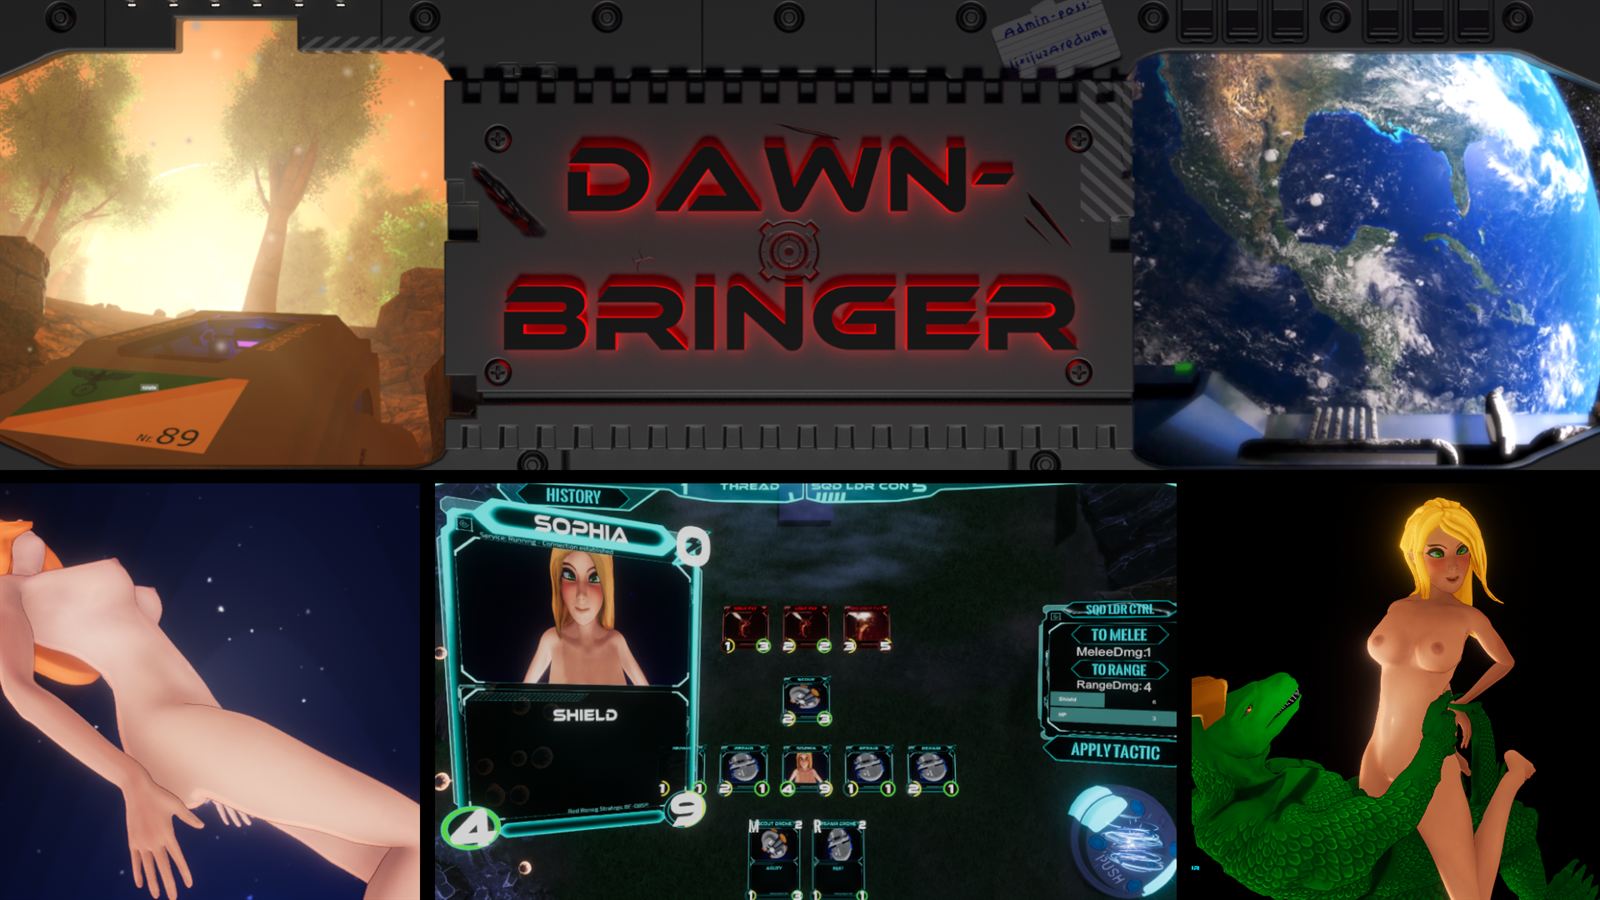 Dawnbringer porn xxx game download cover